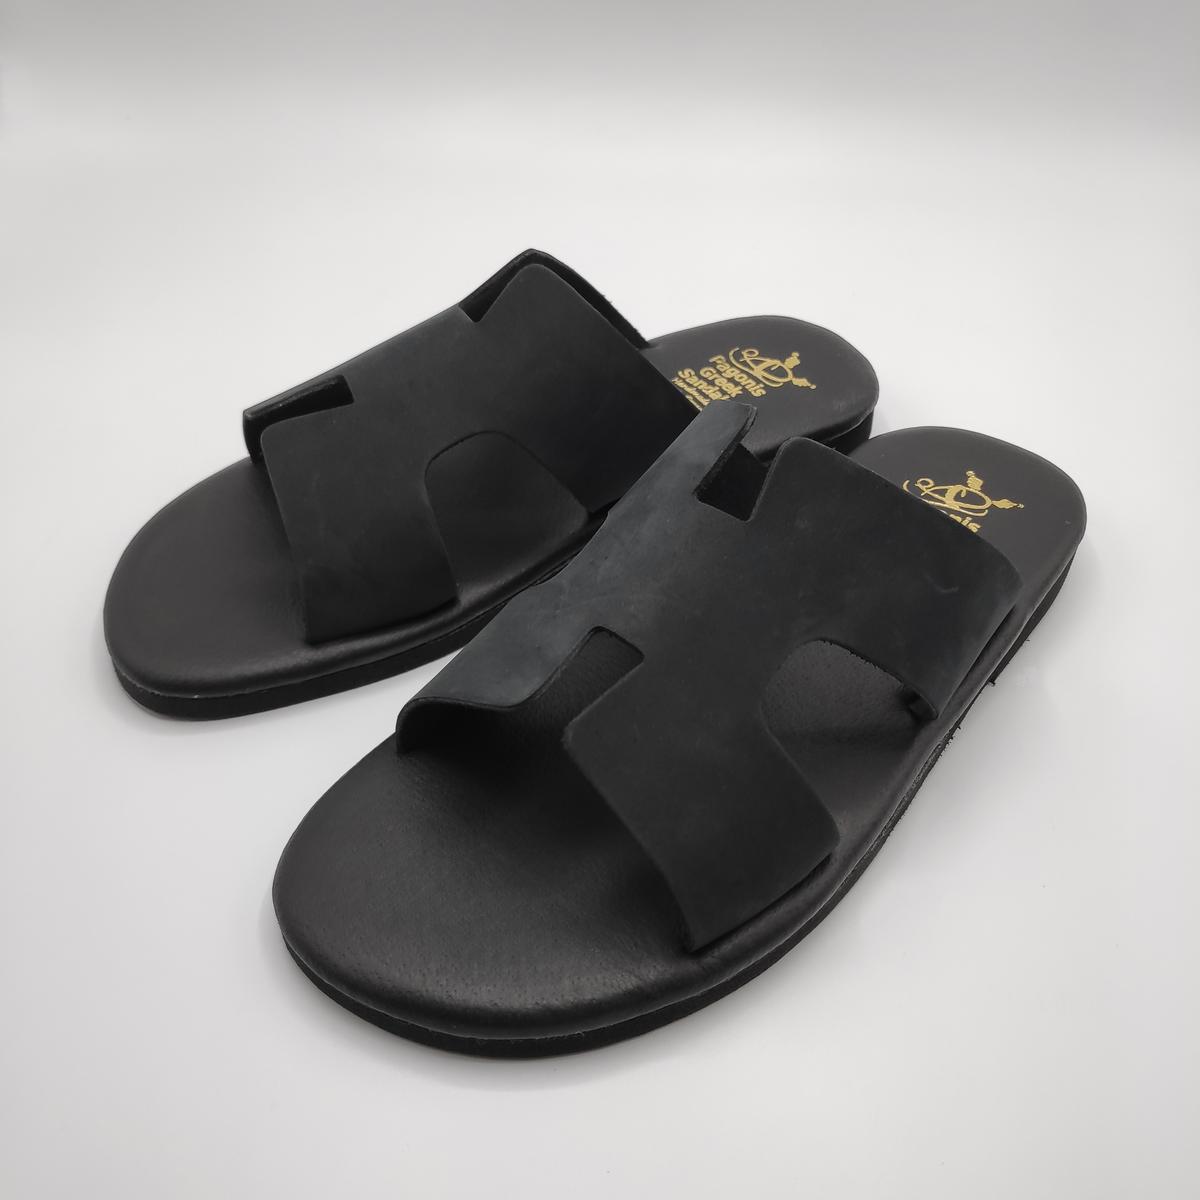 Hermes Men's Leather Sandals - Hermes Men Comfort - Leather Sandals |  Pagonis Greek Sandals